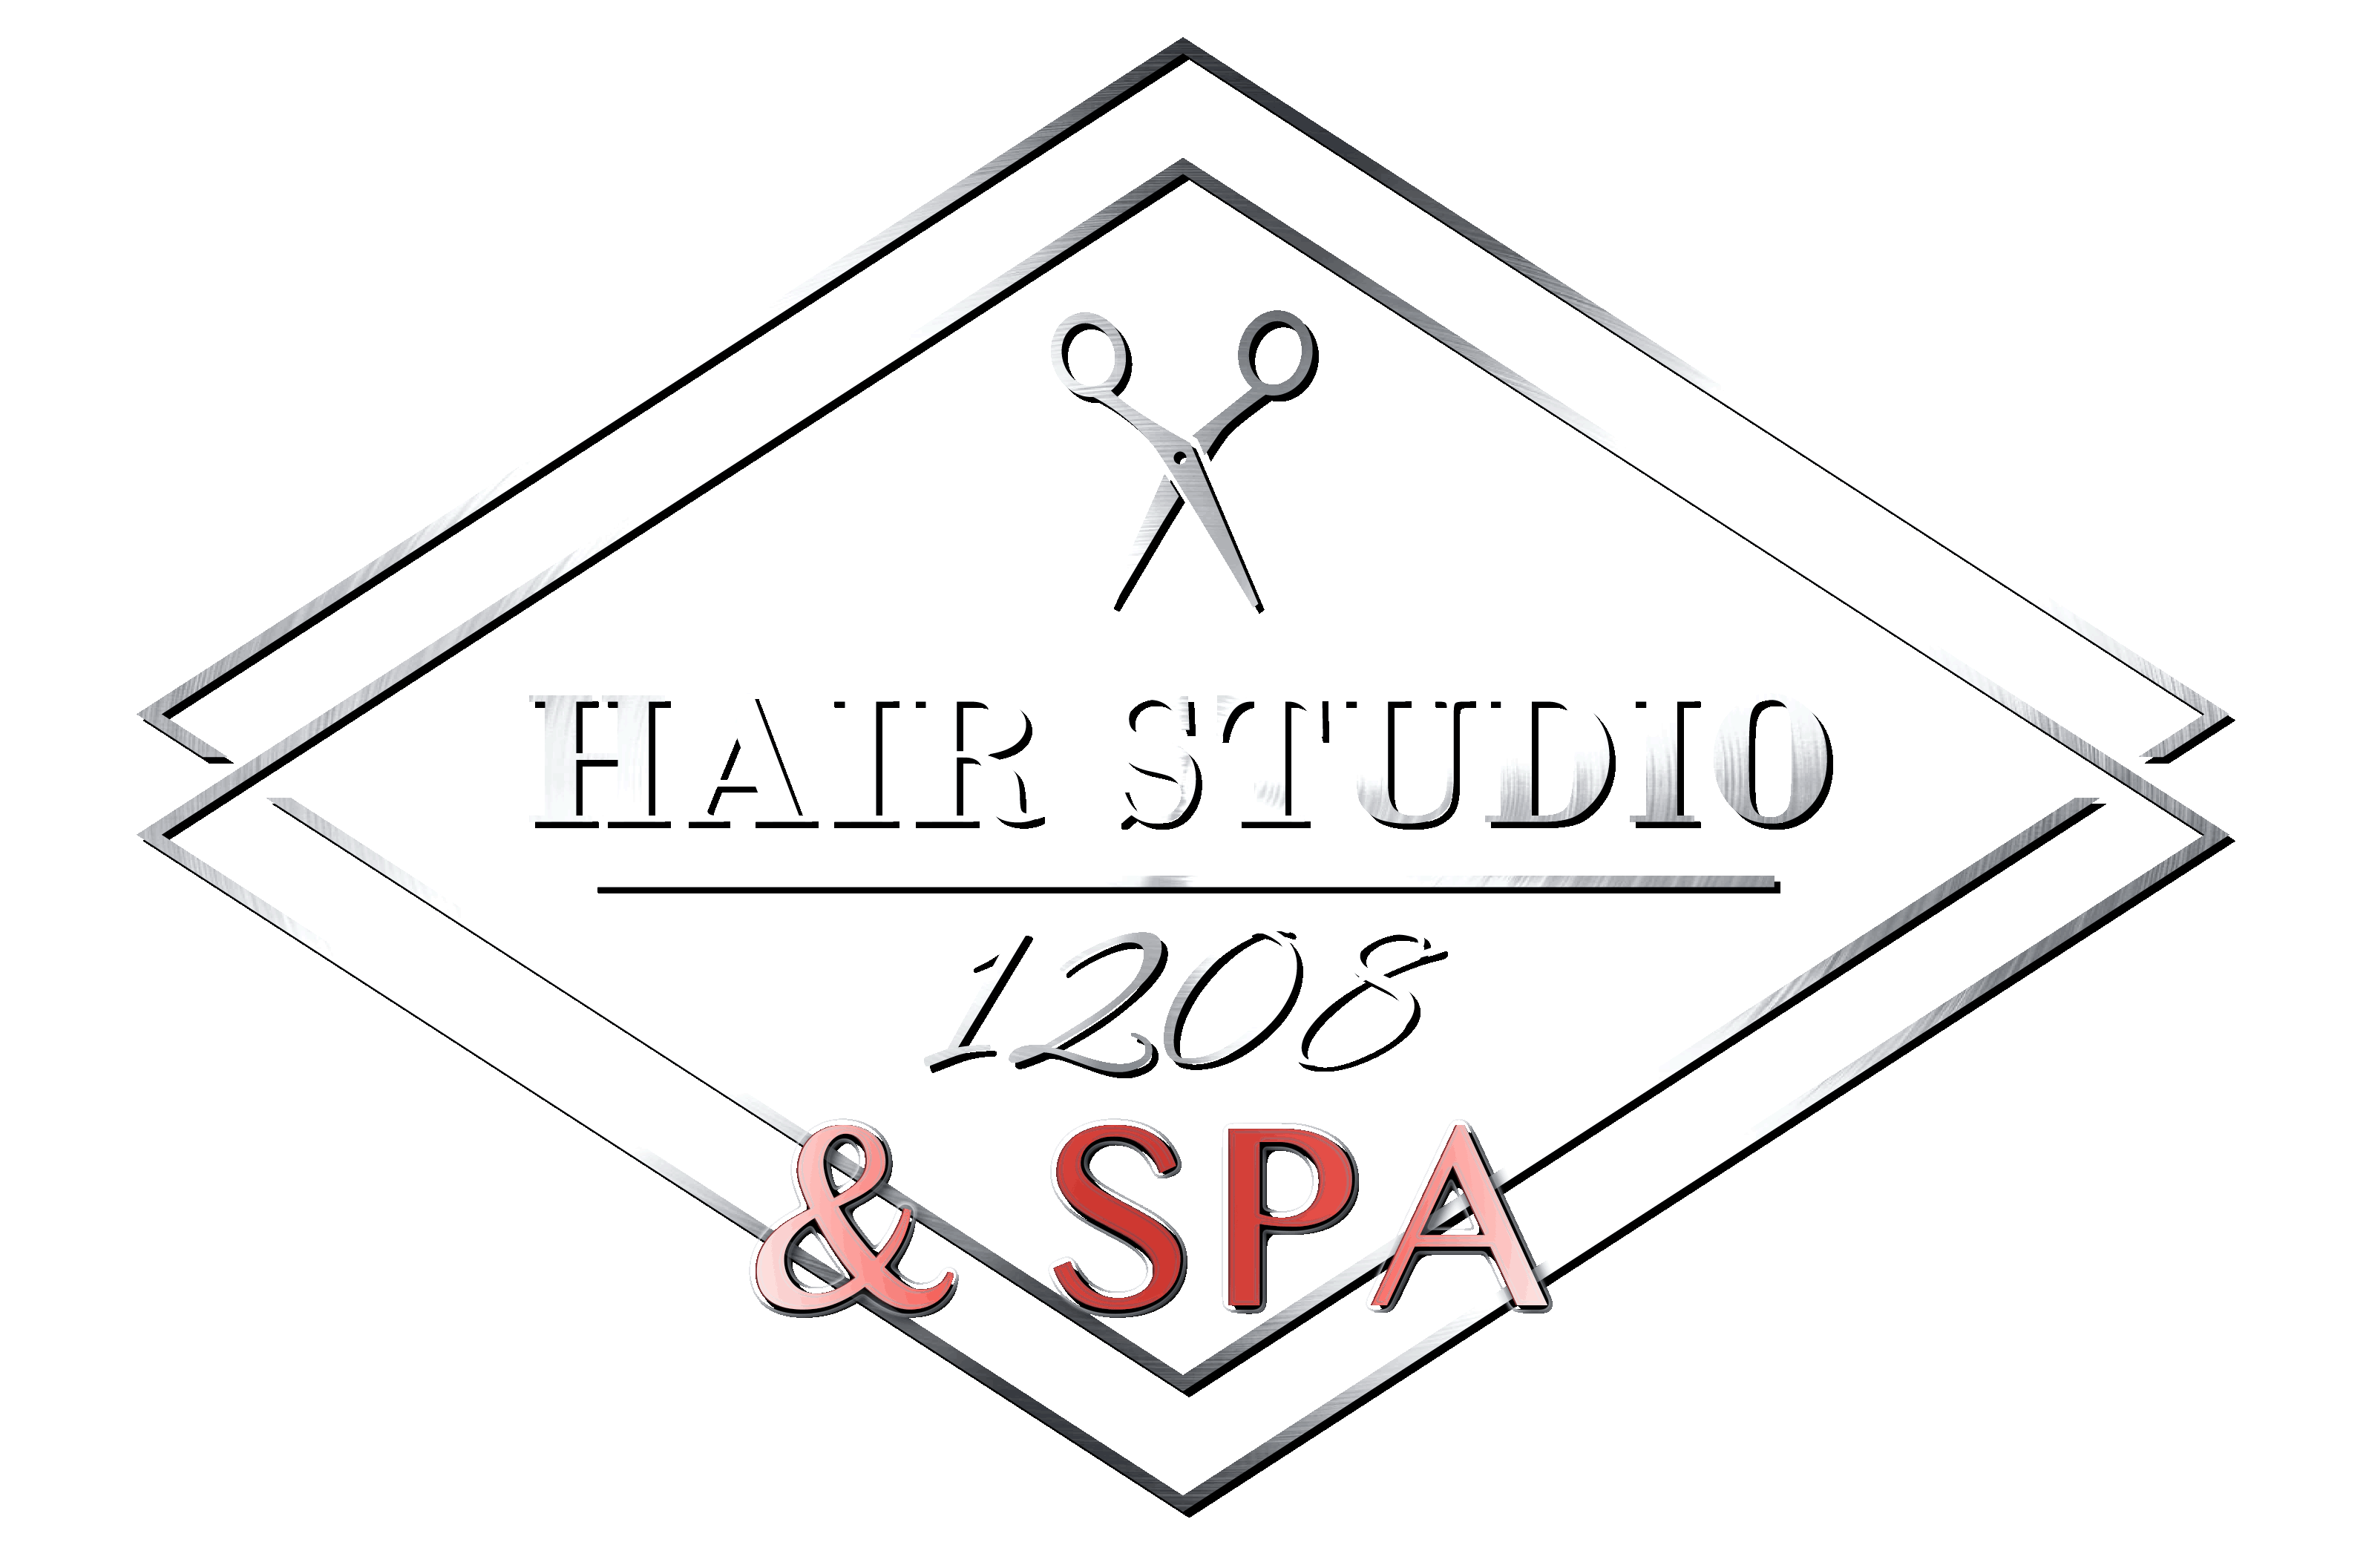 Hair Studio 1208 & Spa!